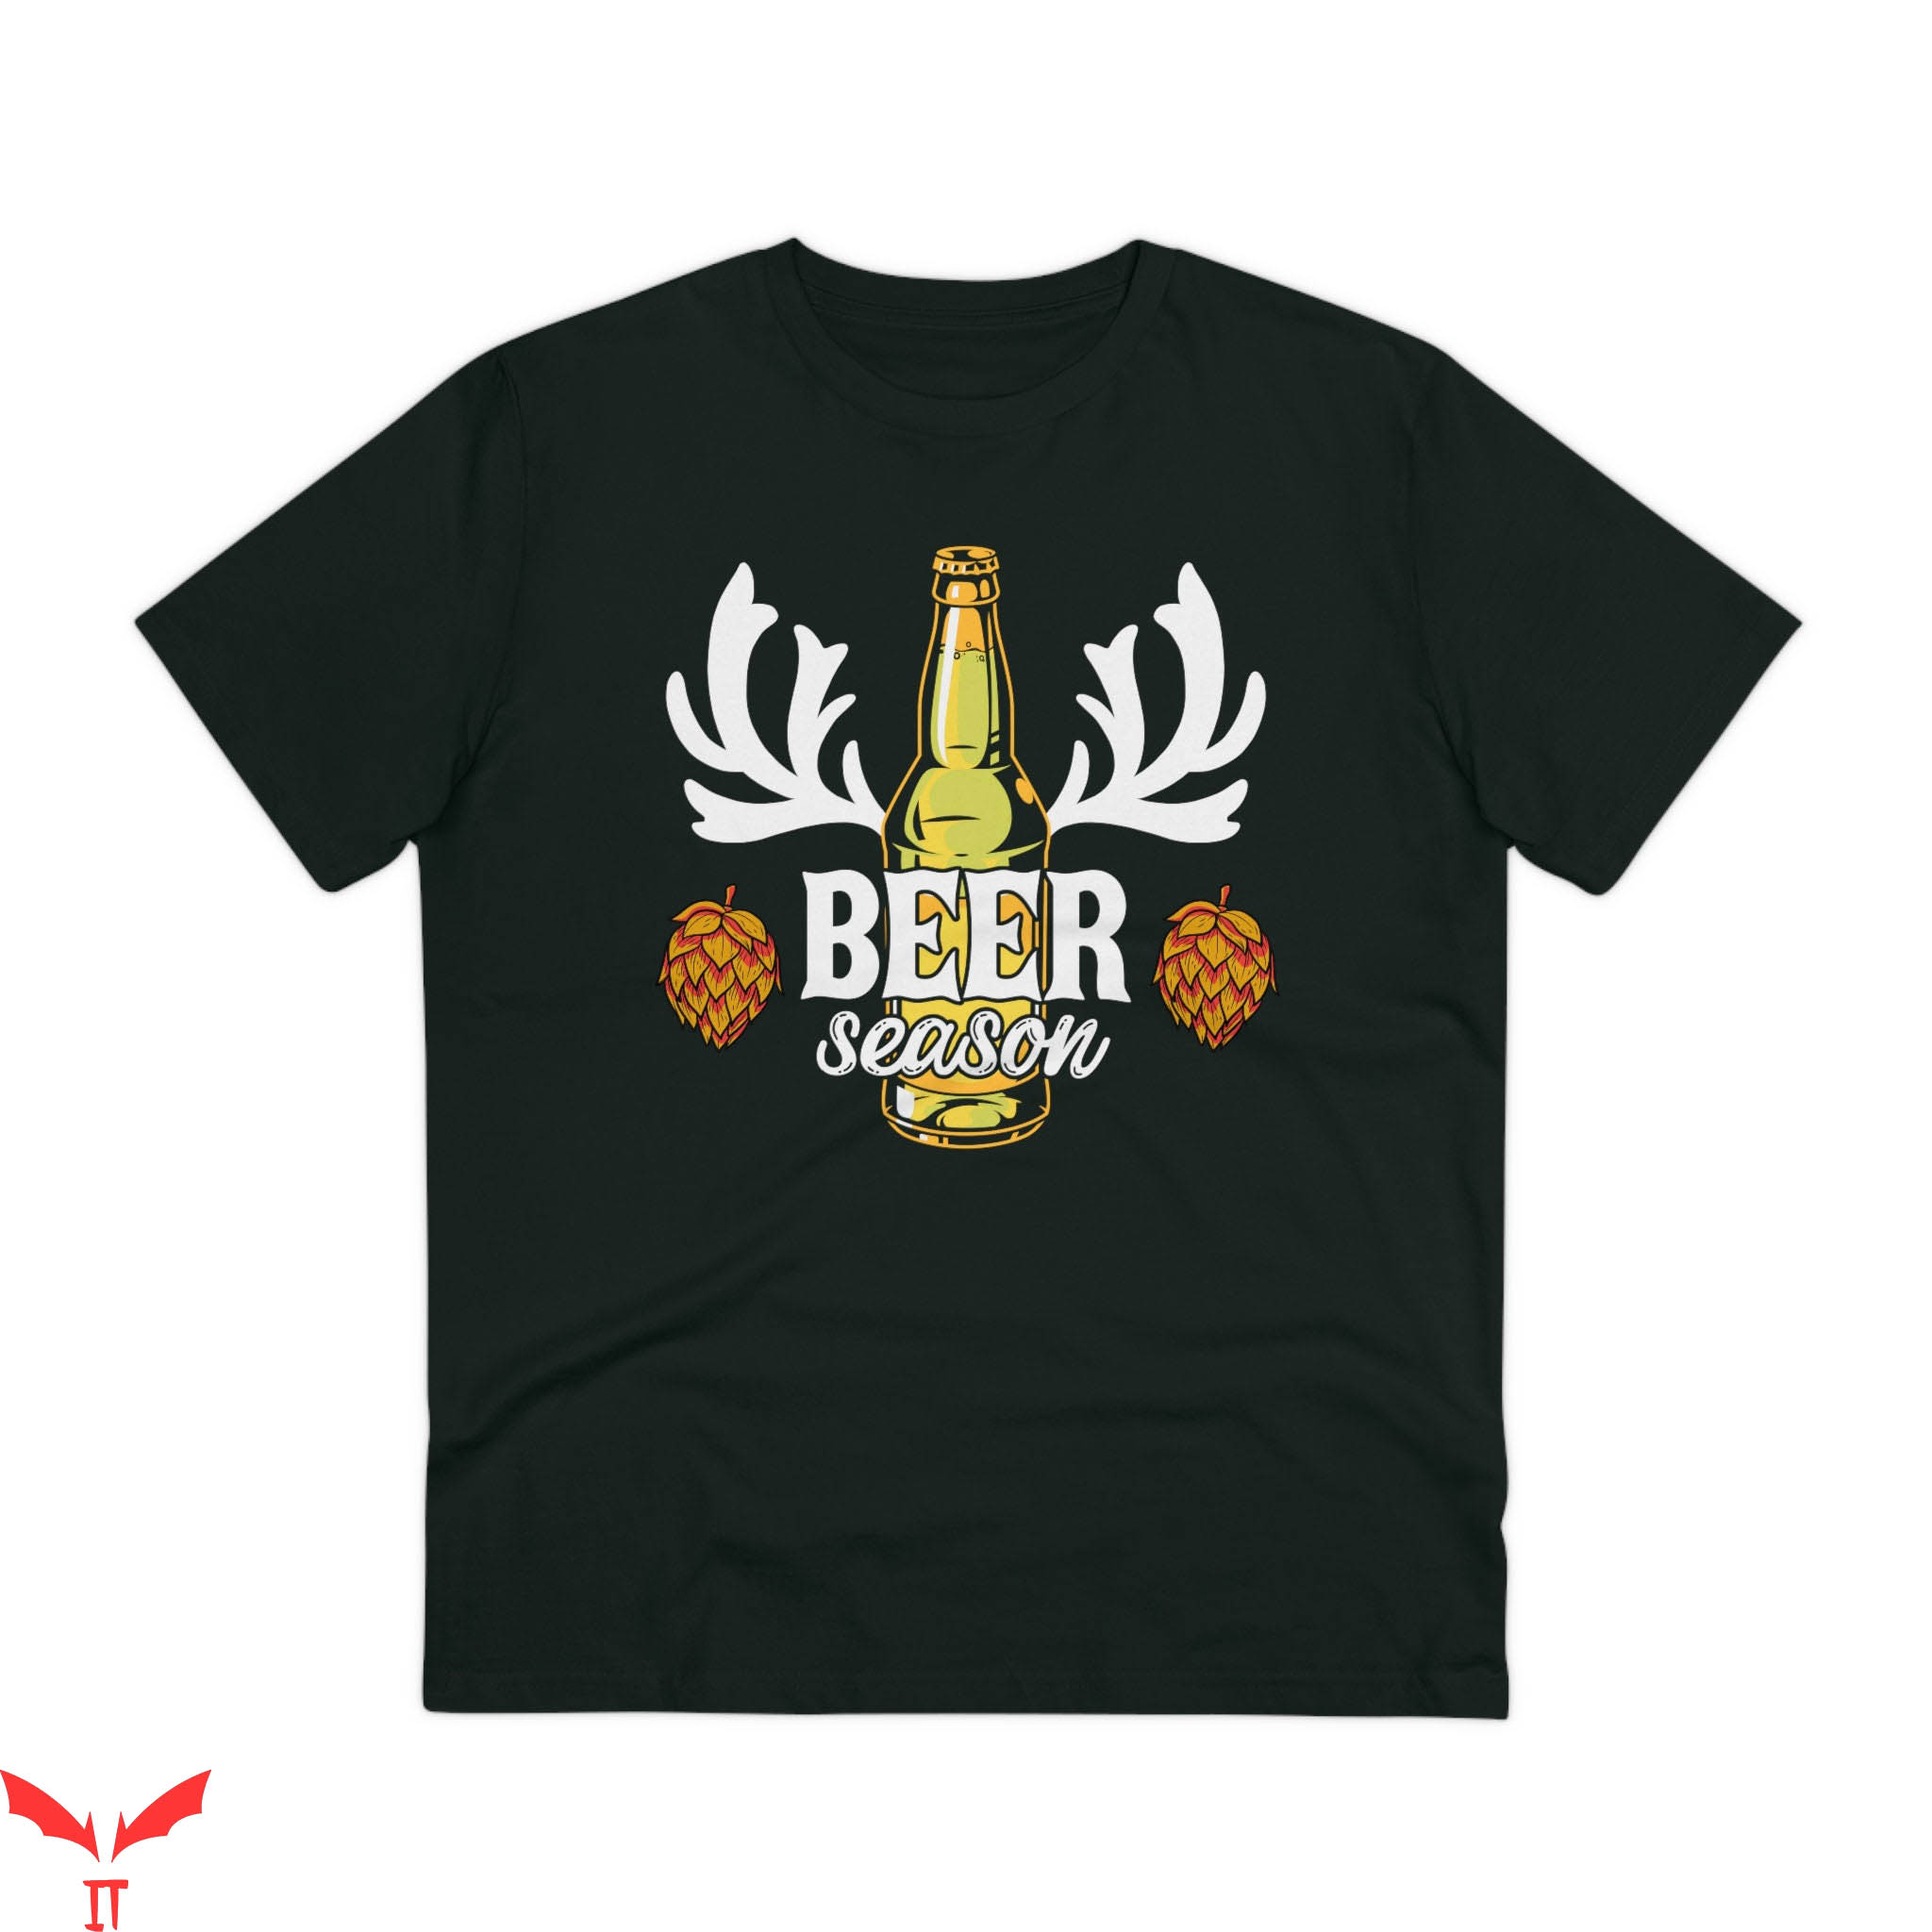 Beer Season T-Shirt Cool Graphic Trendy Design Tee Shirt